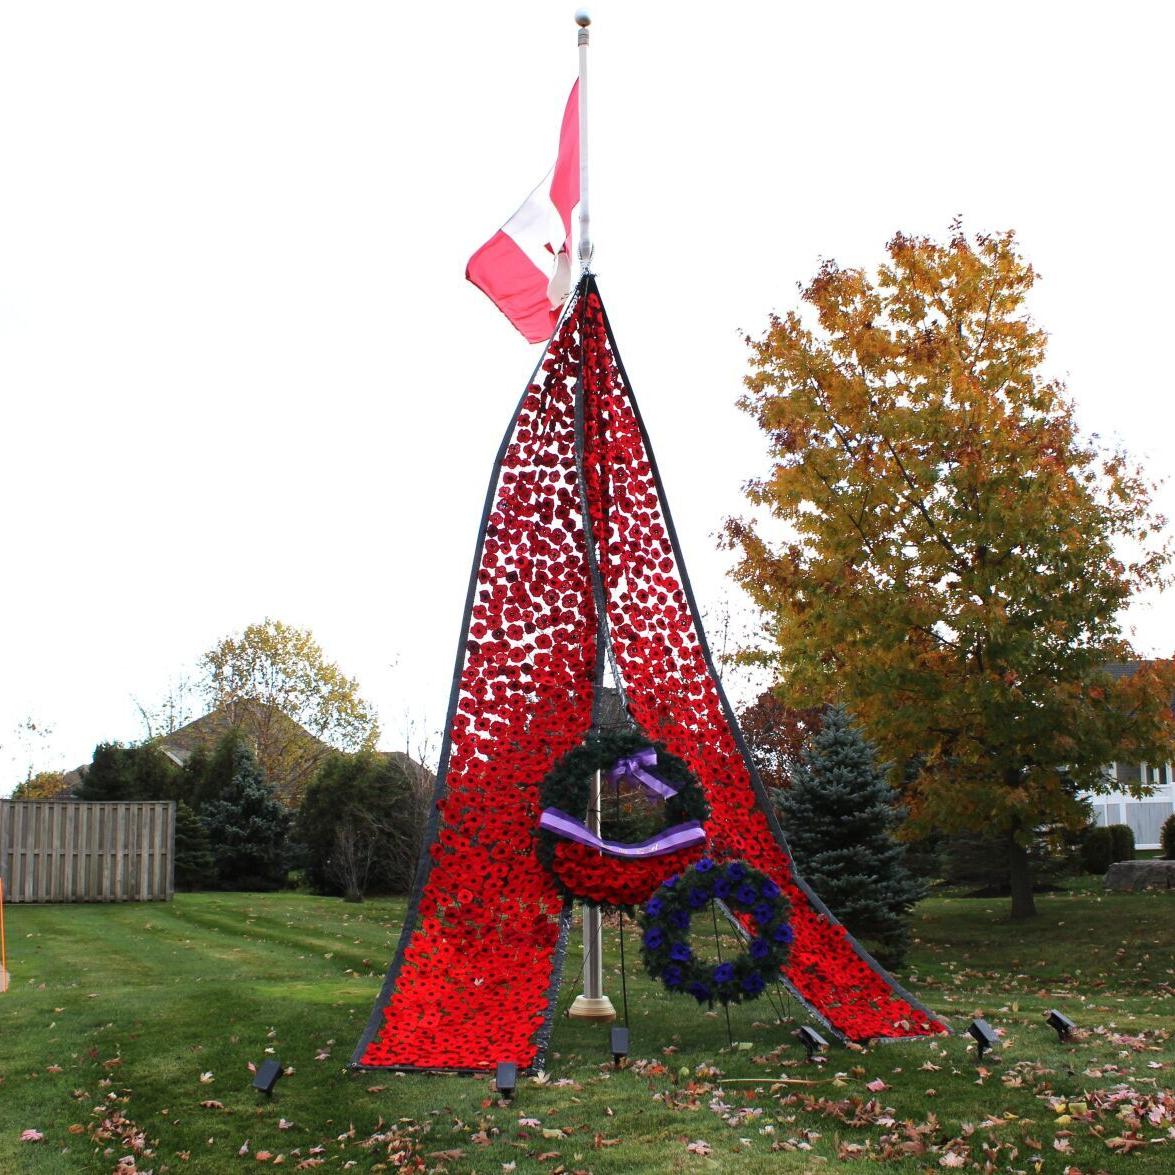 Poppy dress in Manitoba pays tribute to veterans